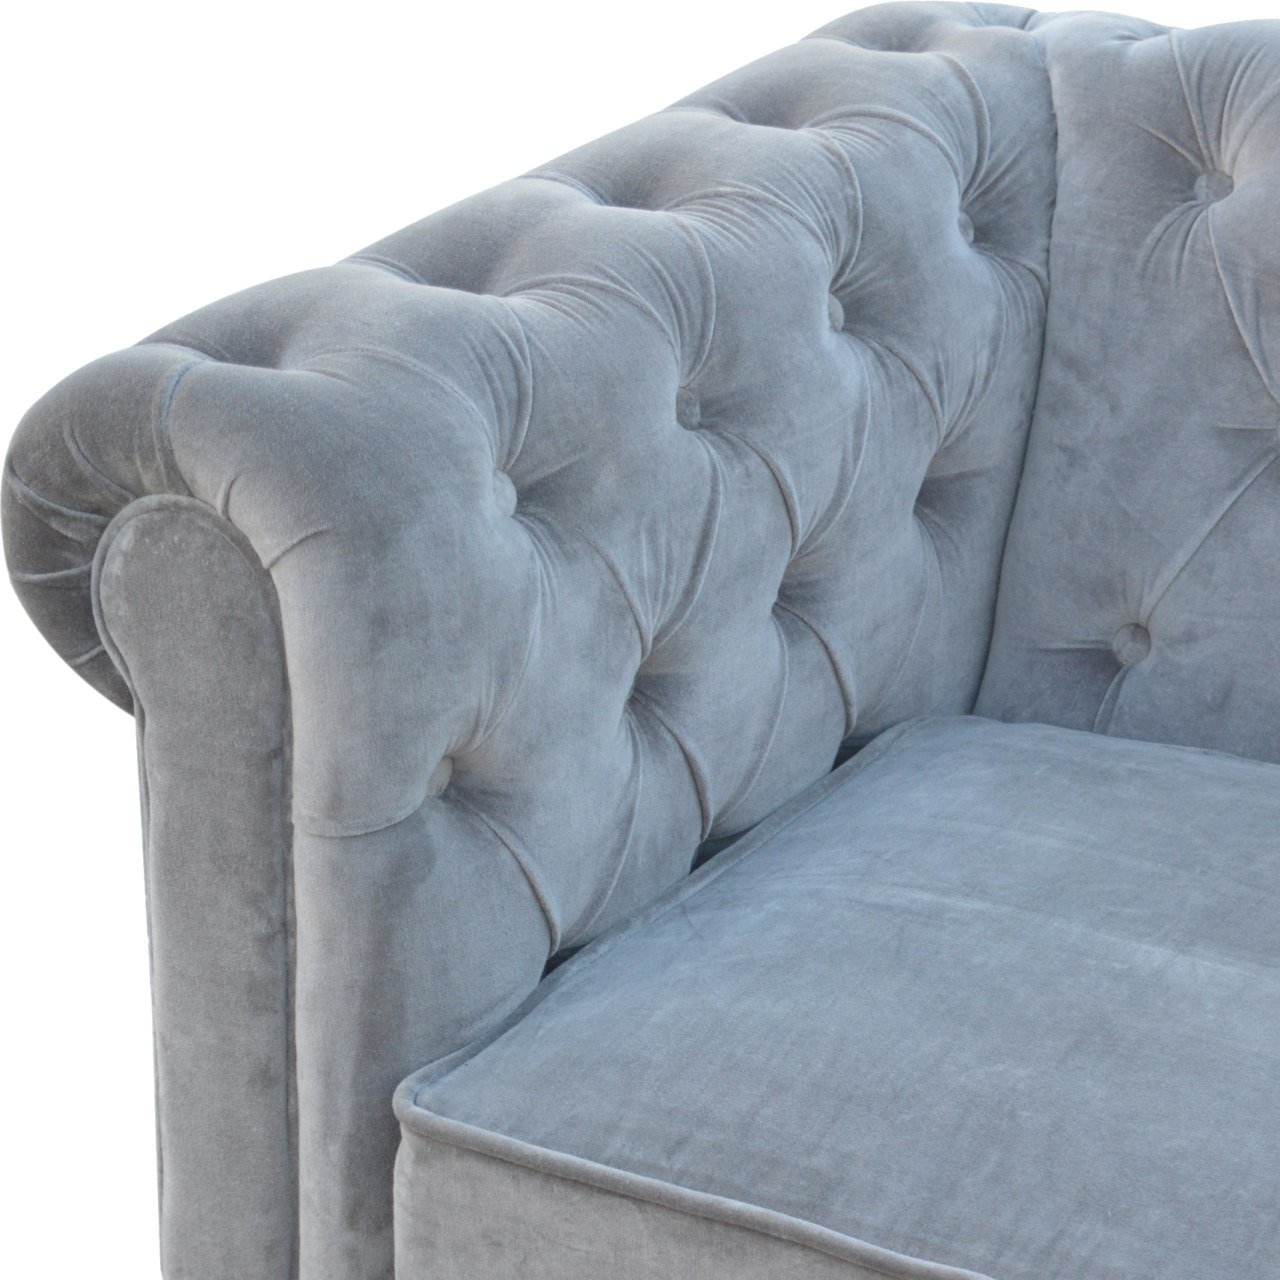 Grey Velvet Chesterfield Sofa - mancavesuperstore